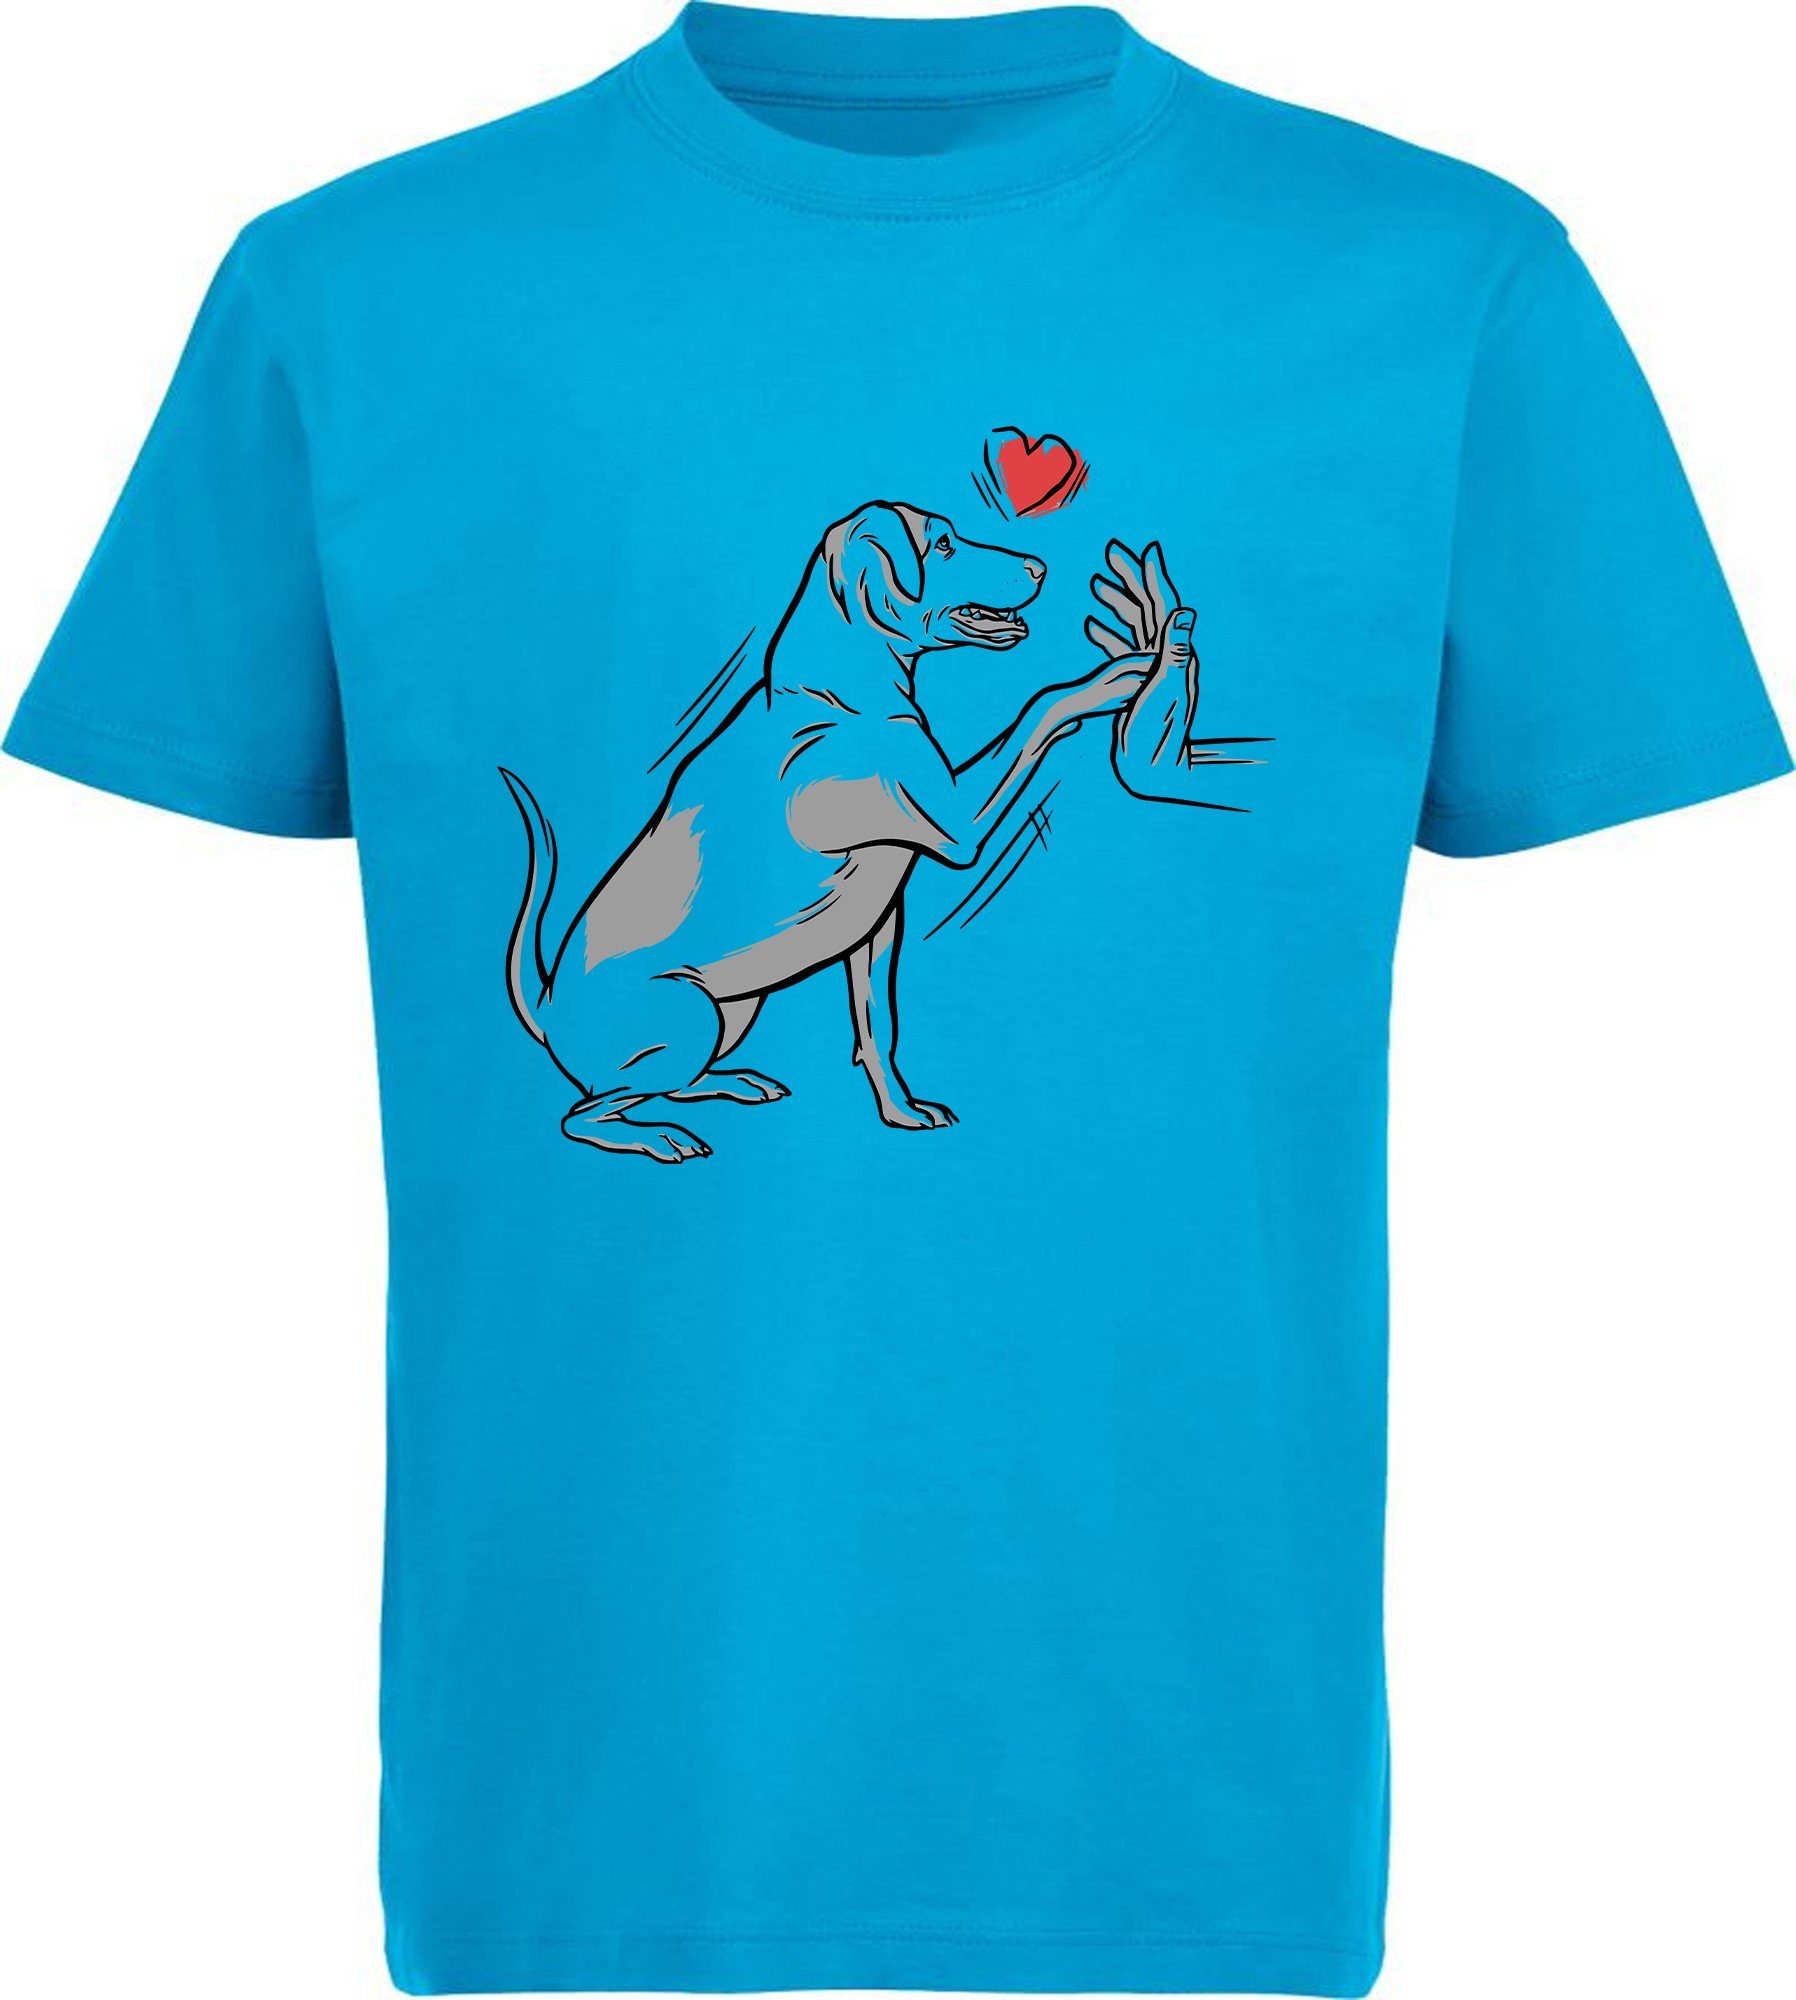 MyDesign24 Print-Shirt Baumwollshirt Hunde Pfötchen Labrador Aufdruck, aqua bedruckt - Kinder i234 gibt mit T-Shirt blau